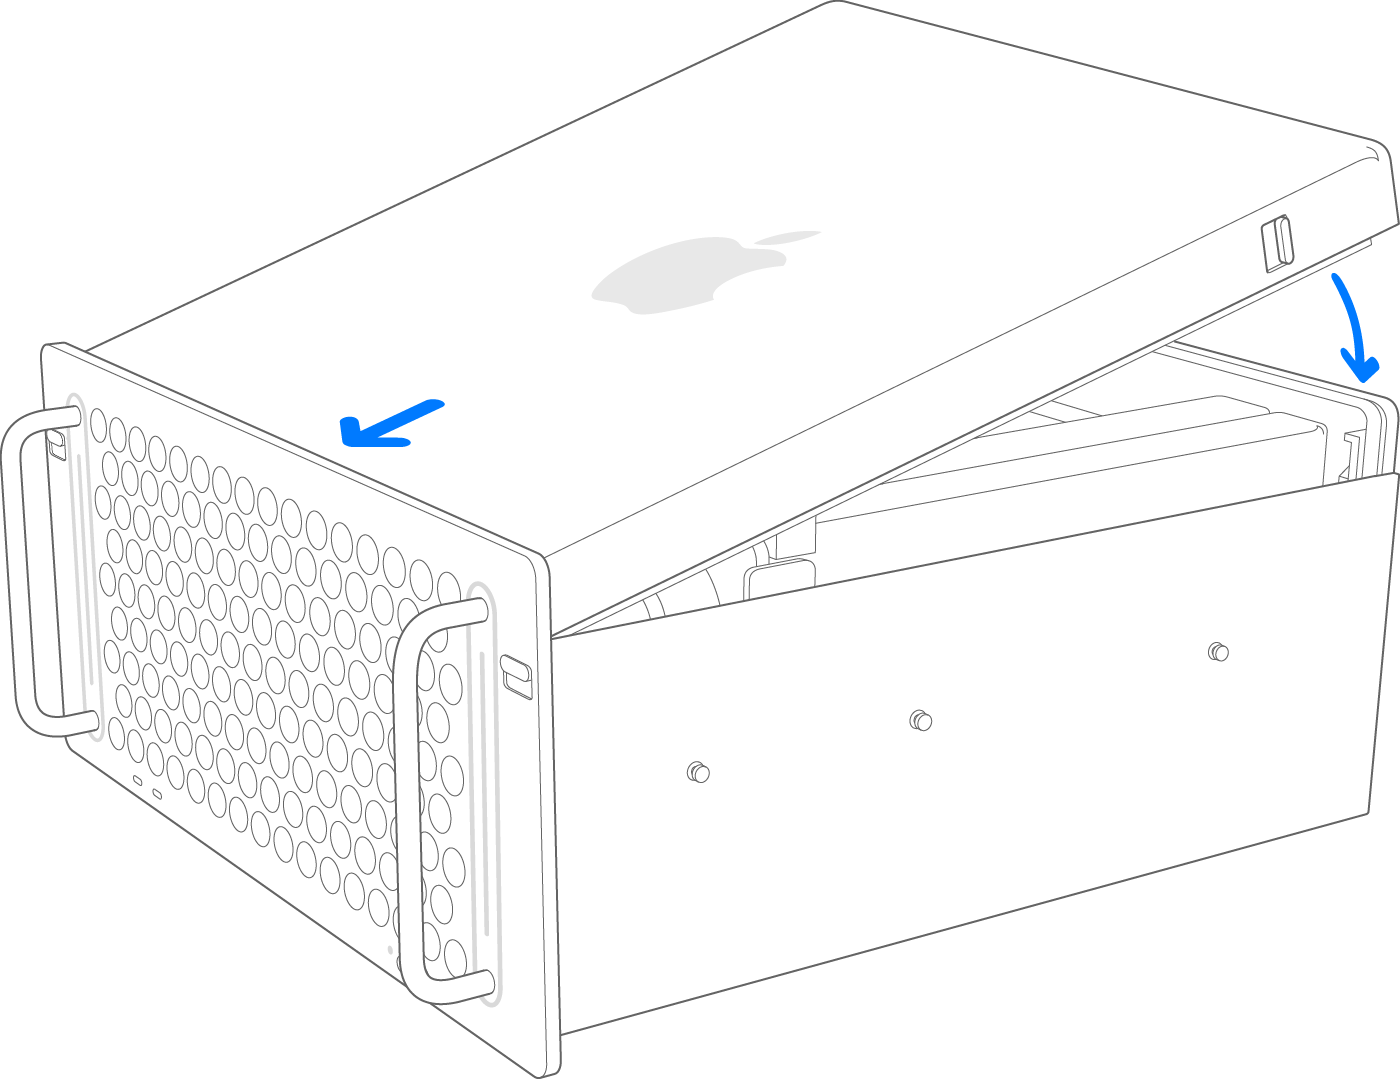 2019-mac-pro-diagram-rack-install-top-cover